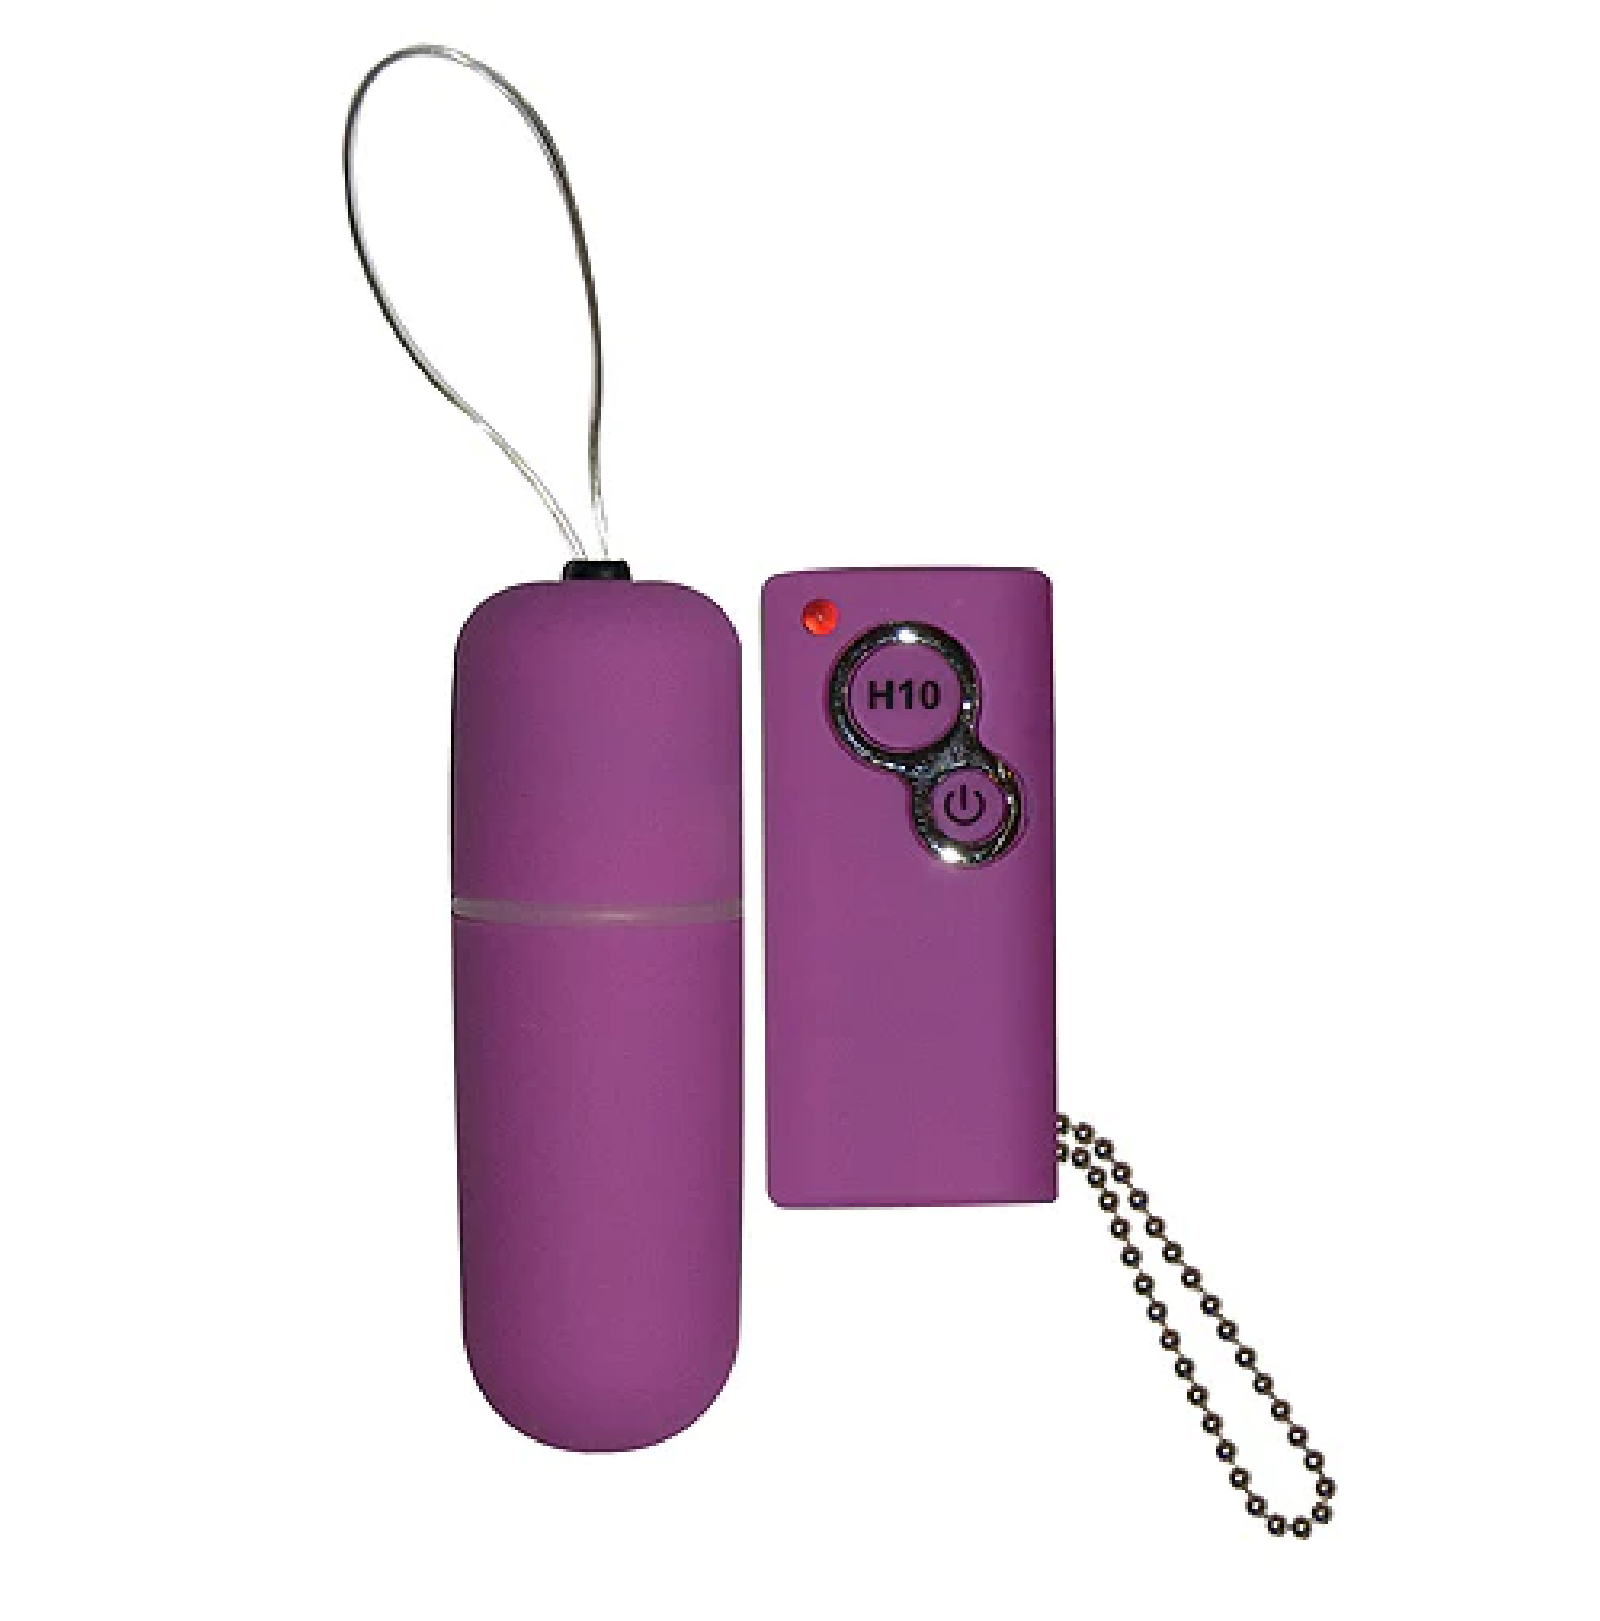 Power Slim Remote Control Bullet Vibrator - Purple